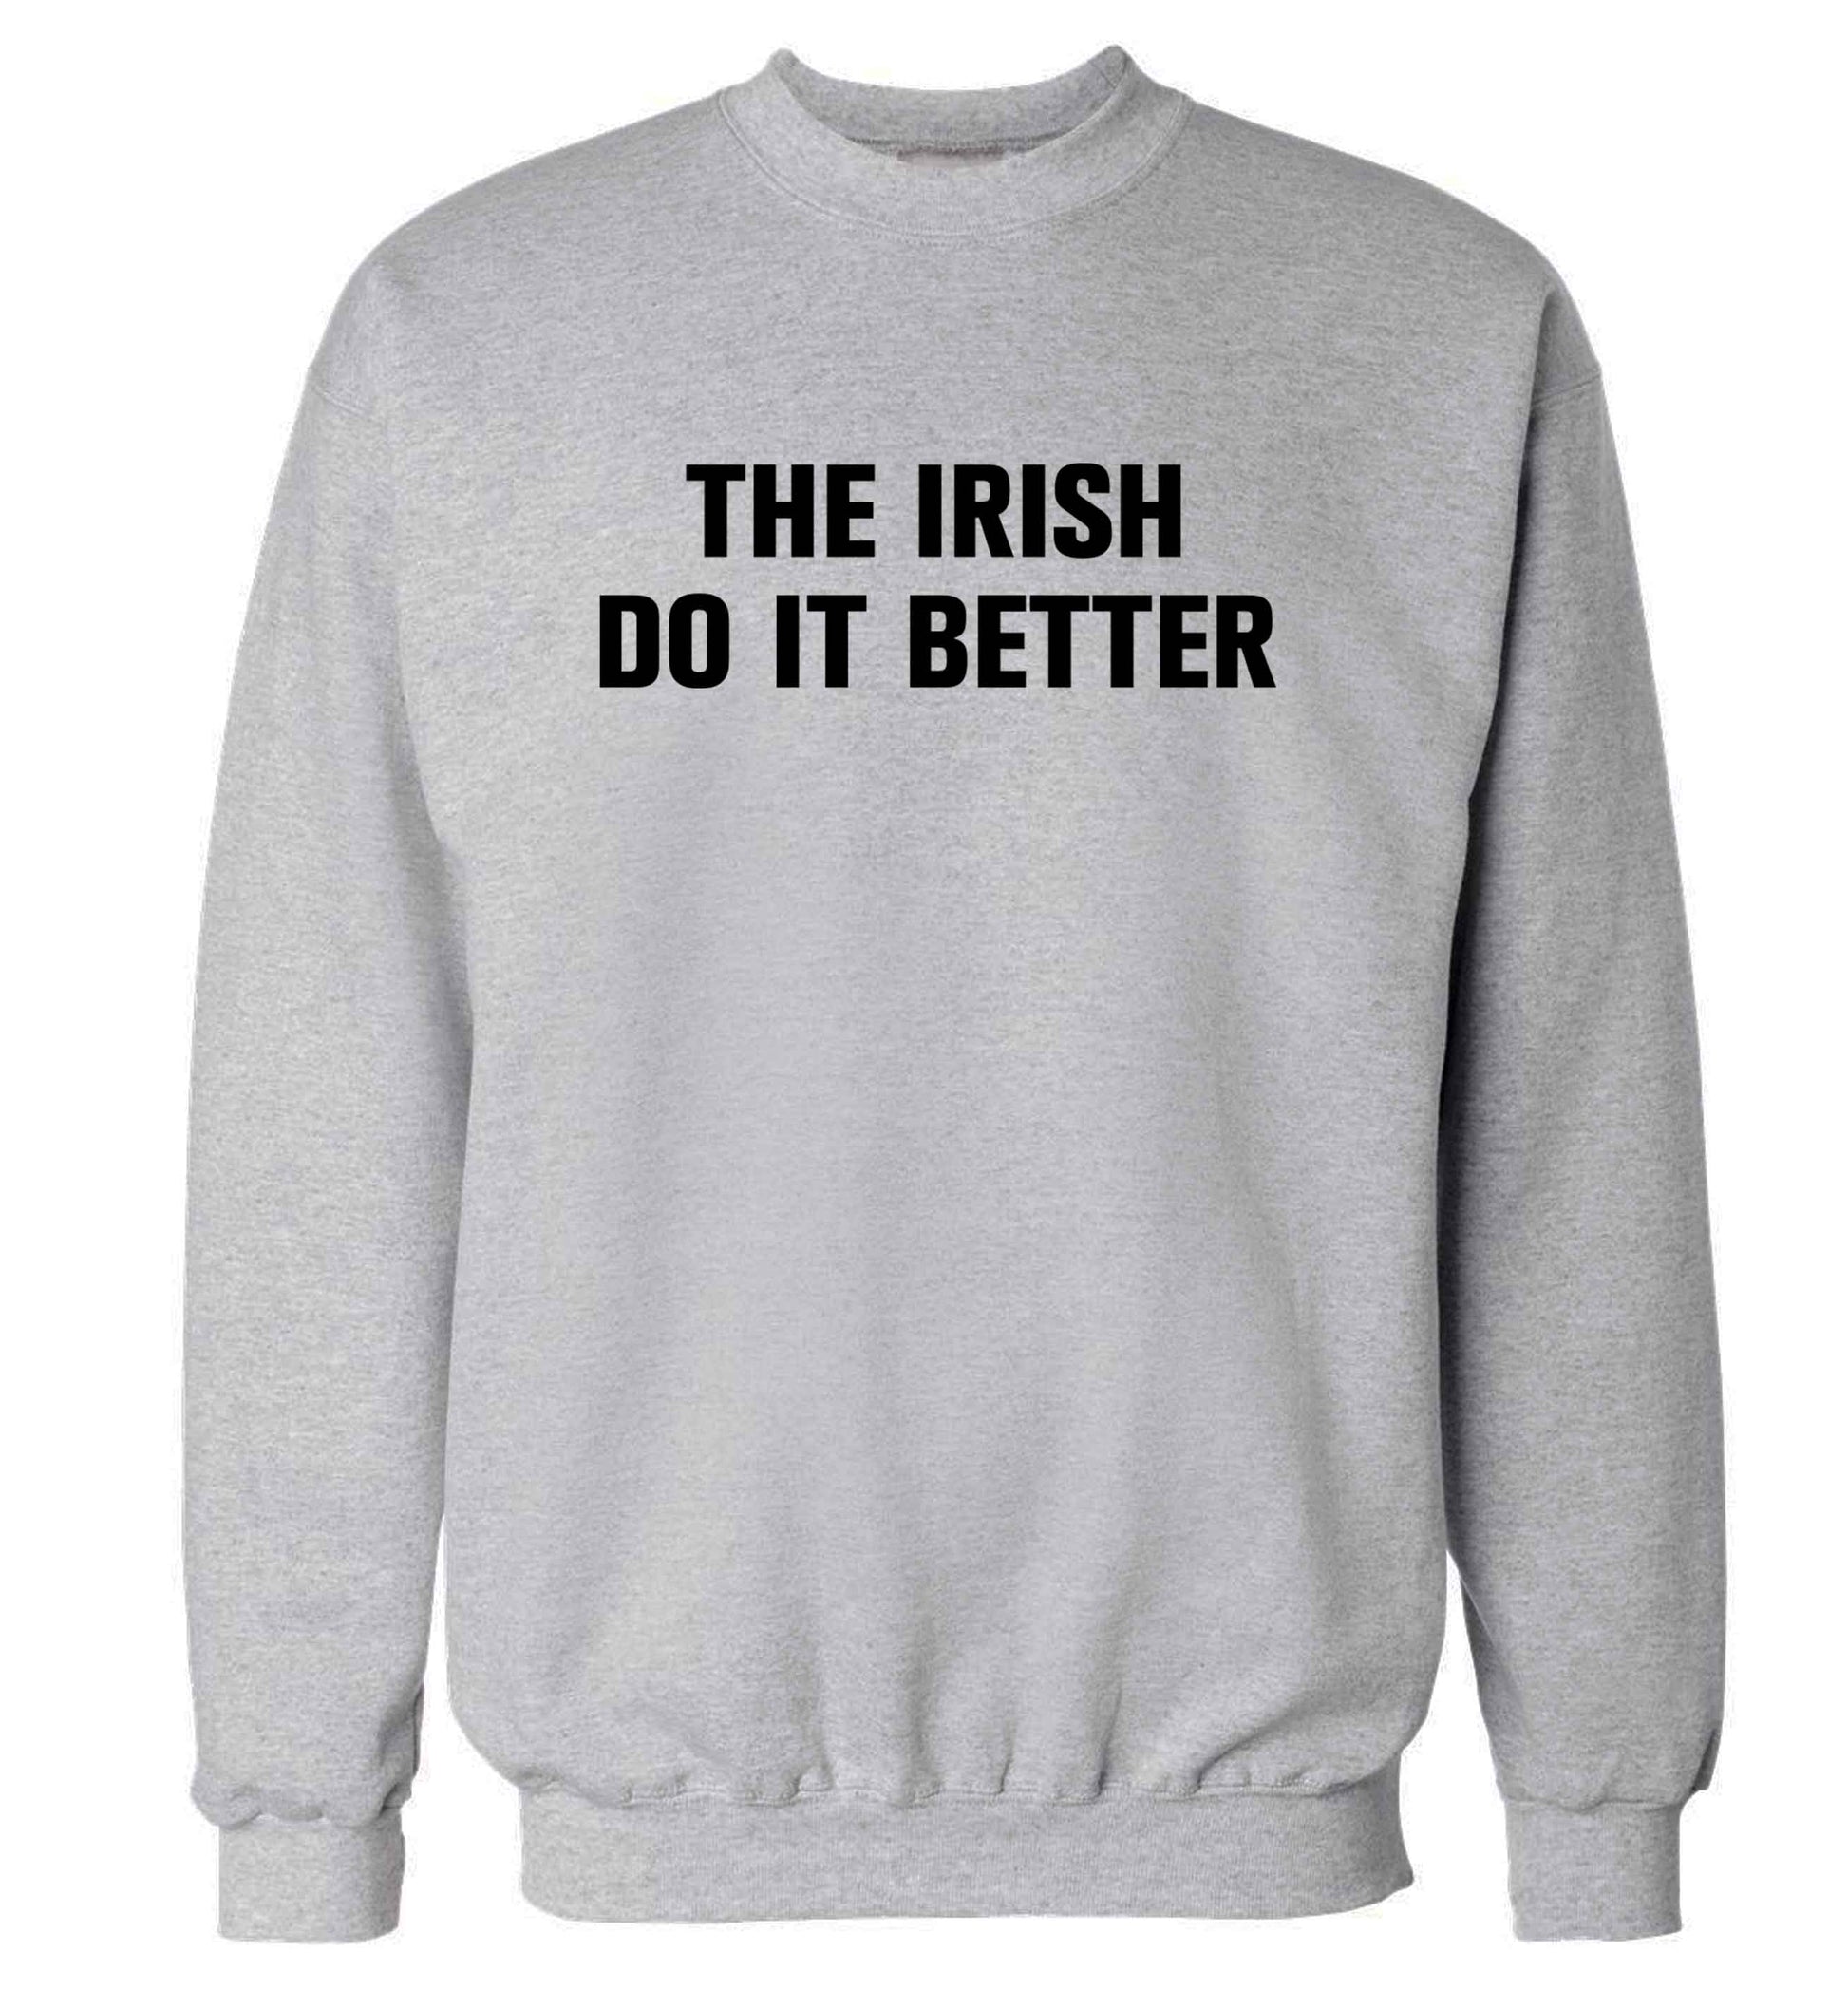 The Irish do it better adult's unisex grey sweater 2XL